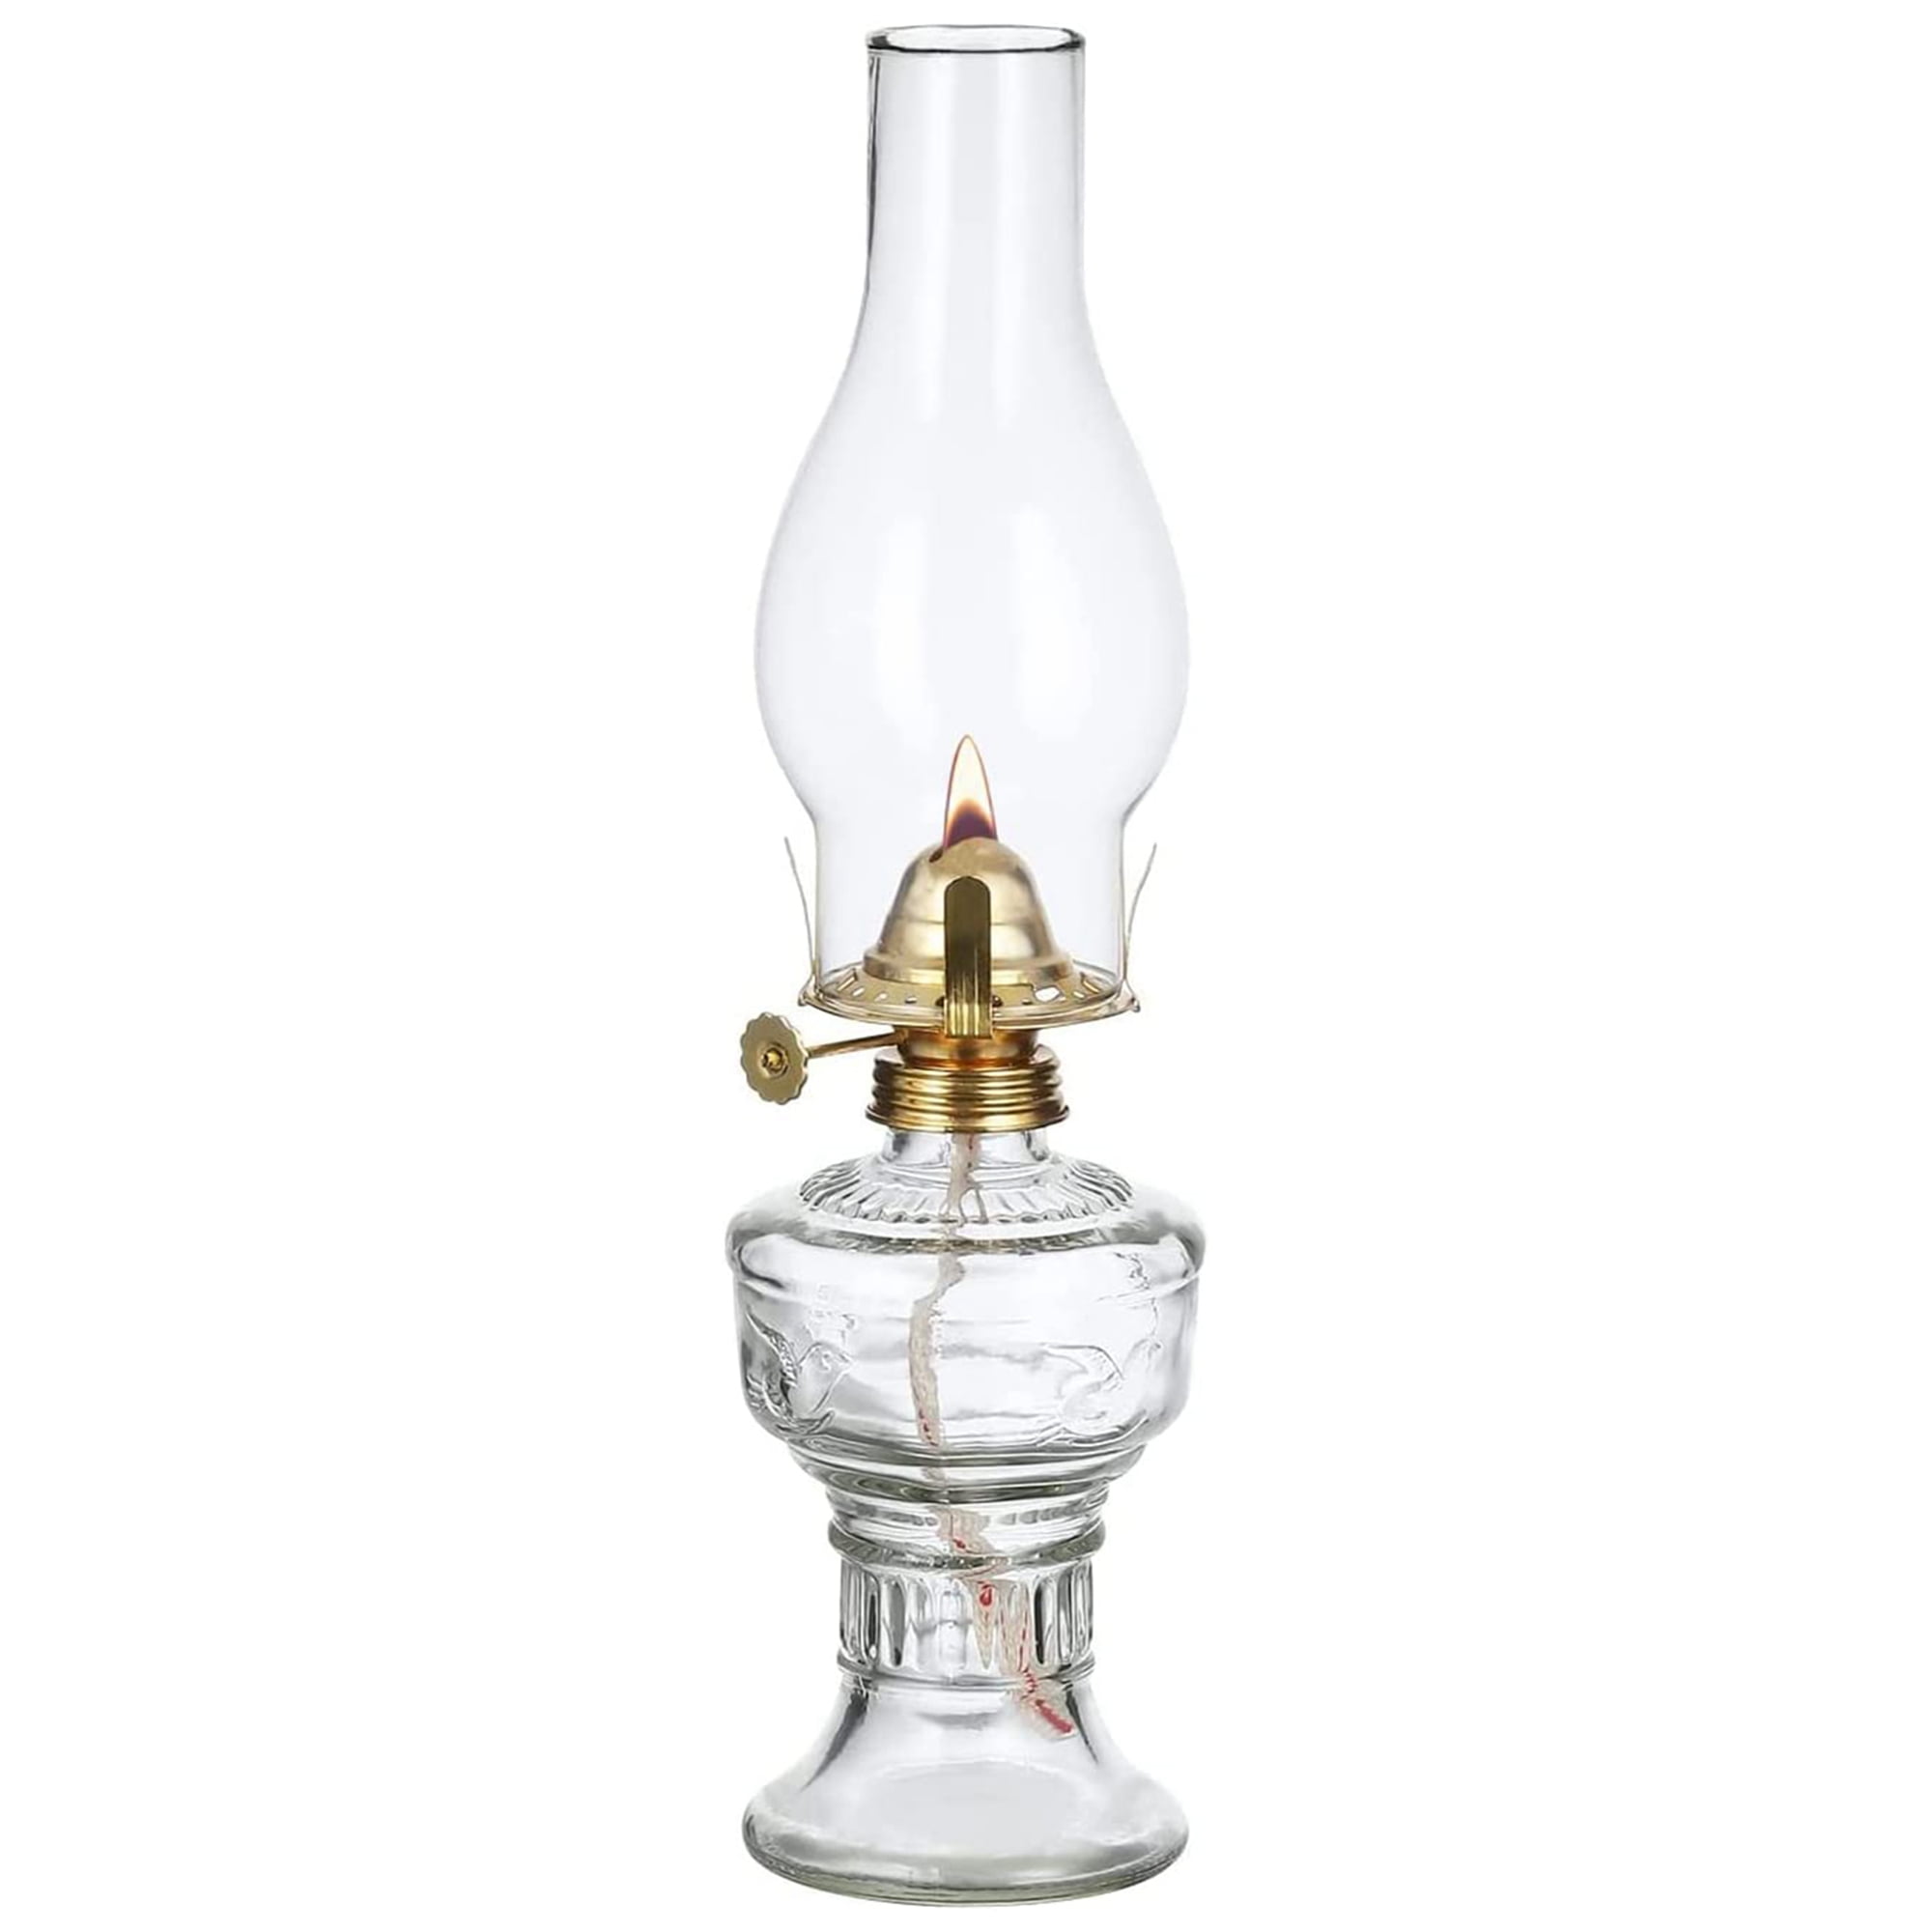 OHKKSD Kerosene Oil Lamps Indoor Use, Kerosene Lantern, Vintage Glass Oil  Lamps Indoor Lighting Decoration Outdoor Camping Use Glass Hurricane